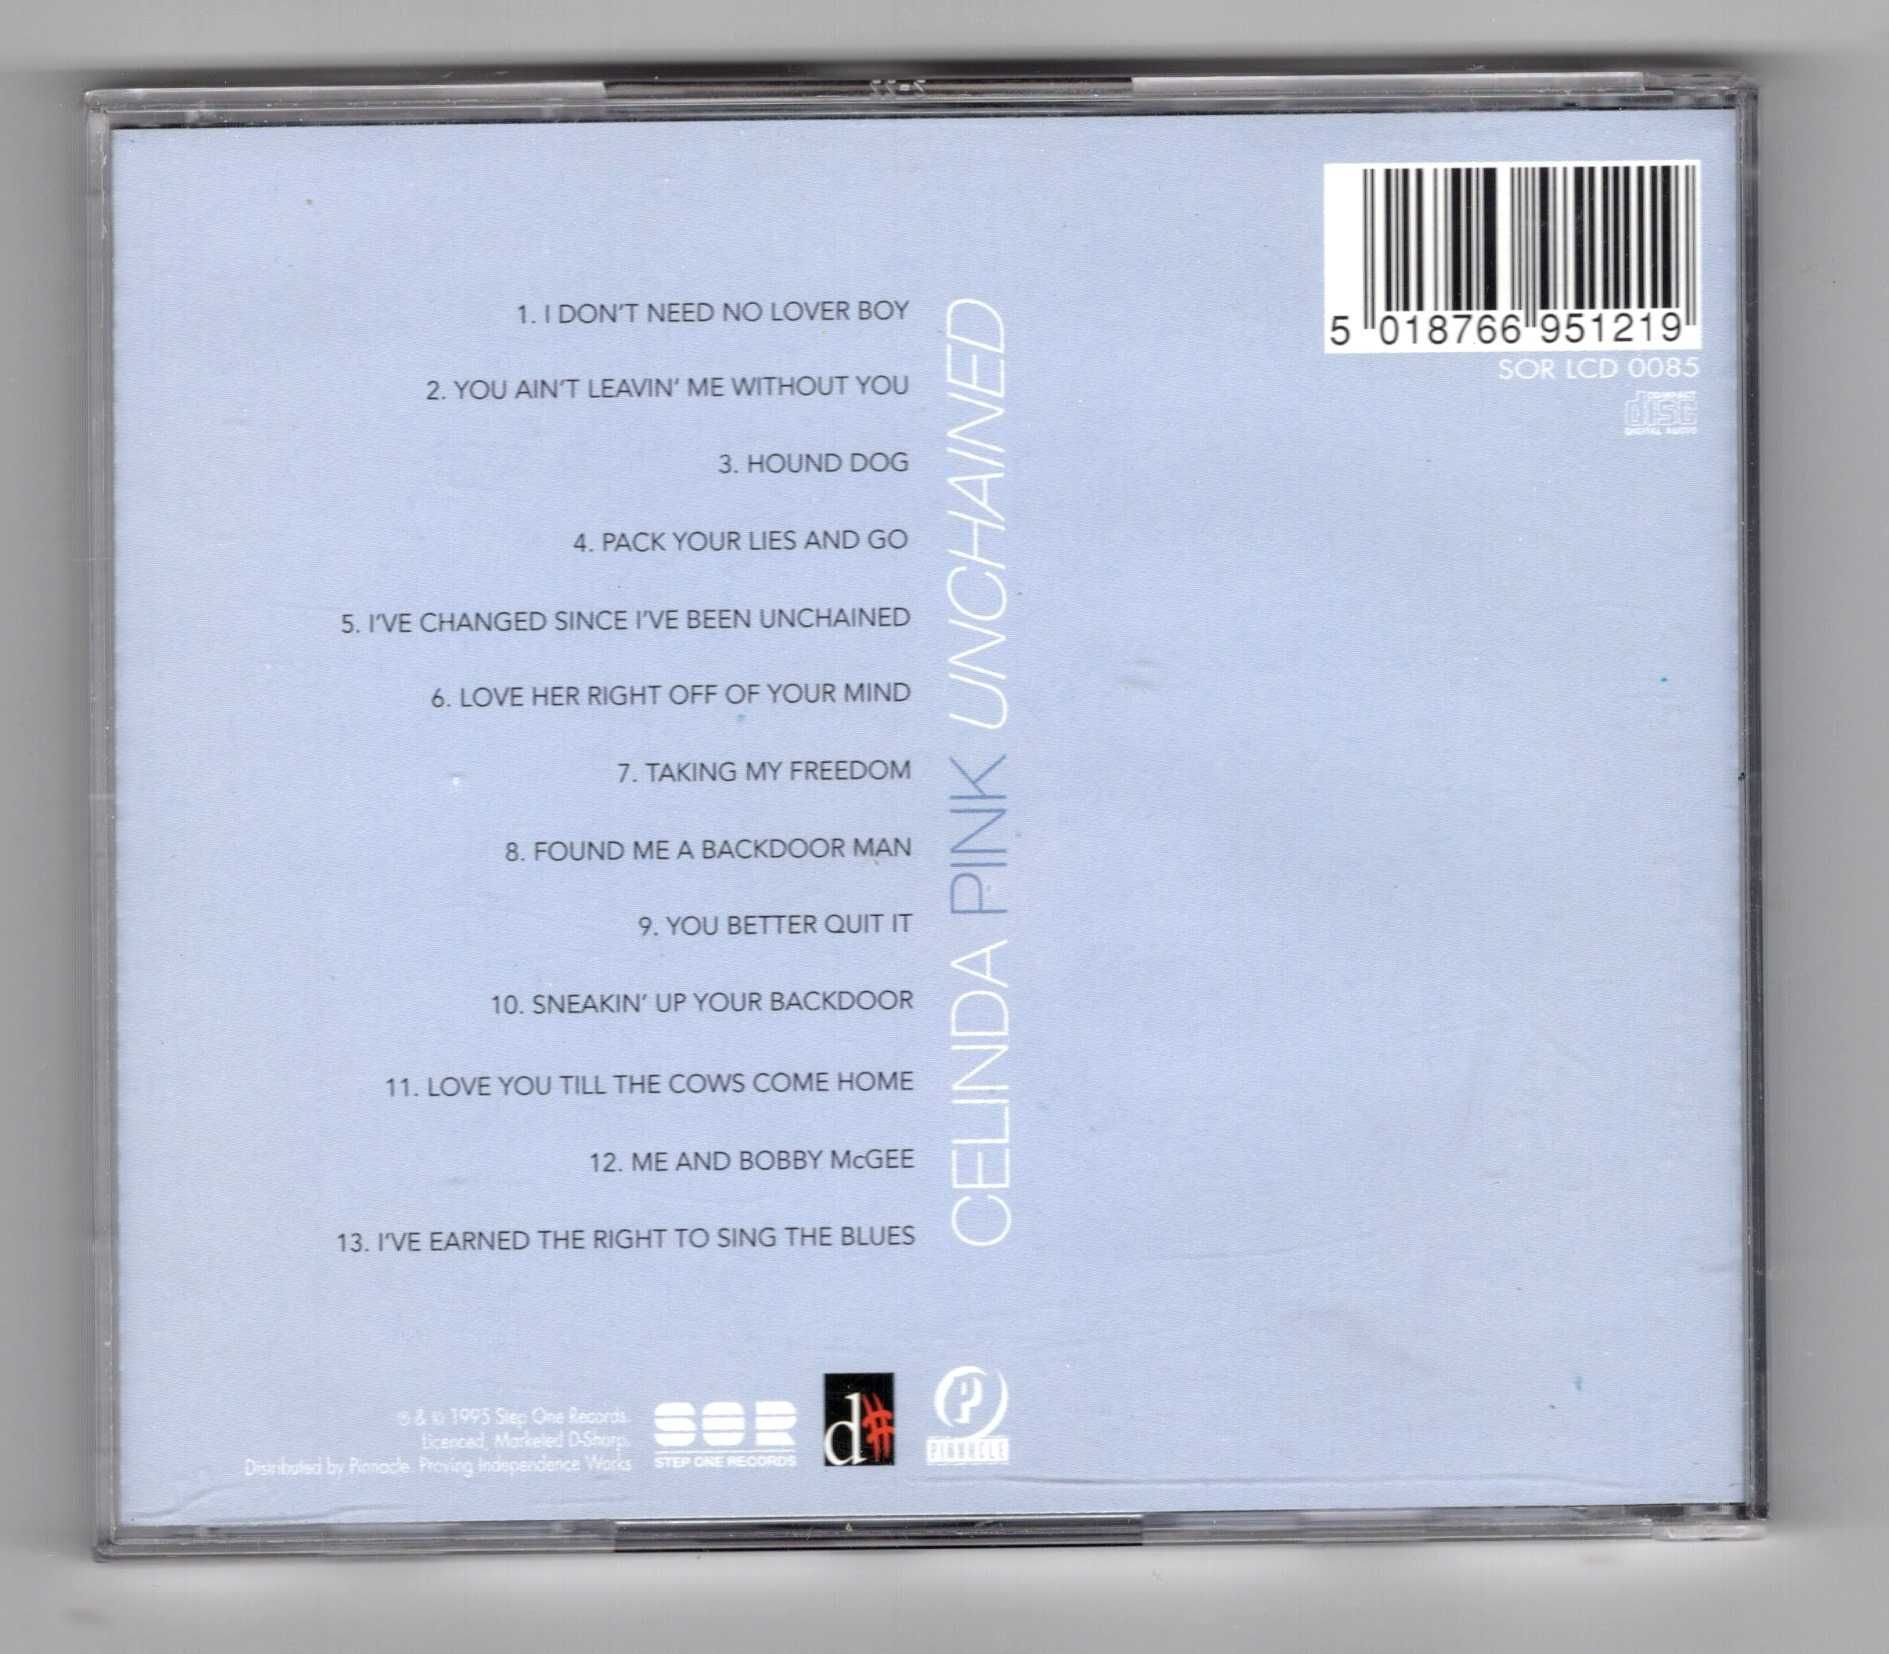 Celinda Pink - Unchained (CD)